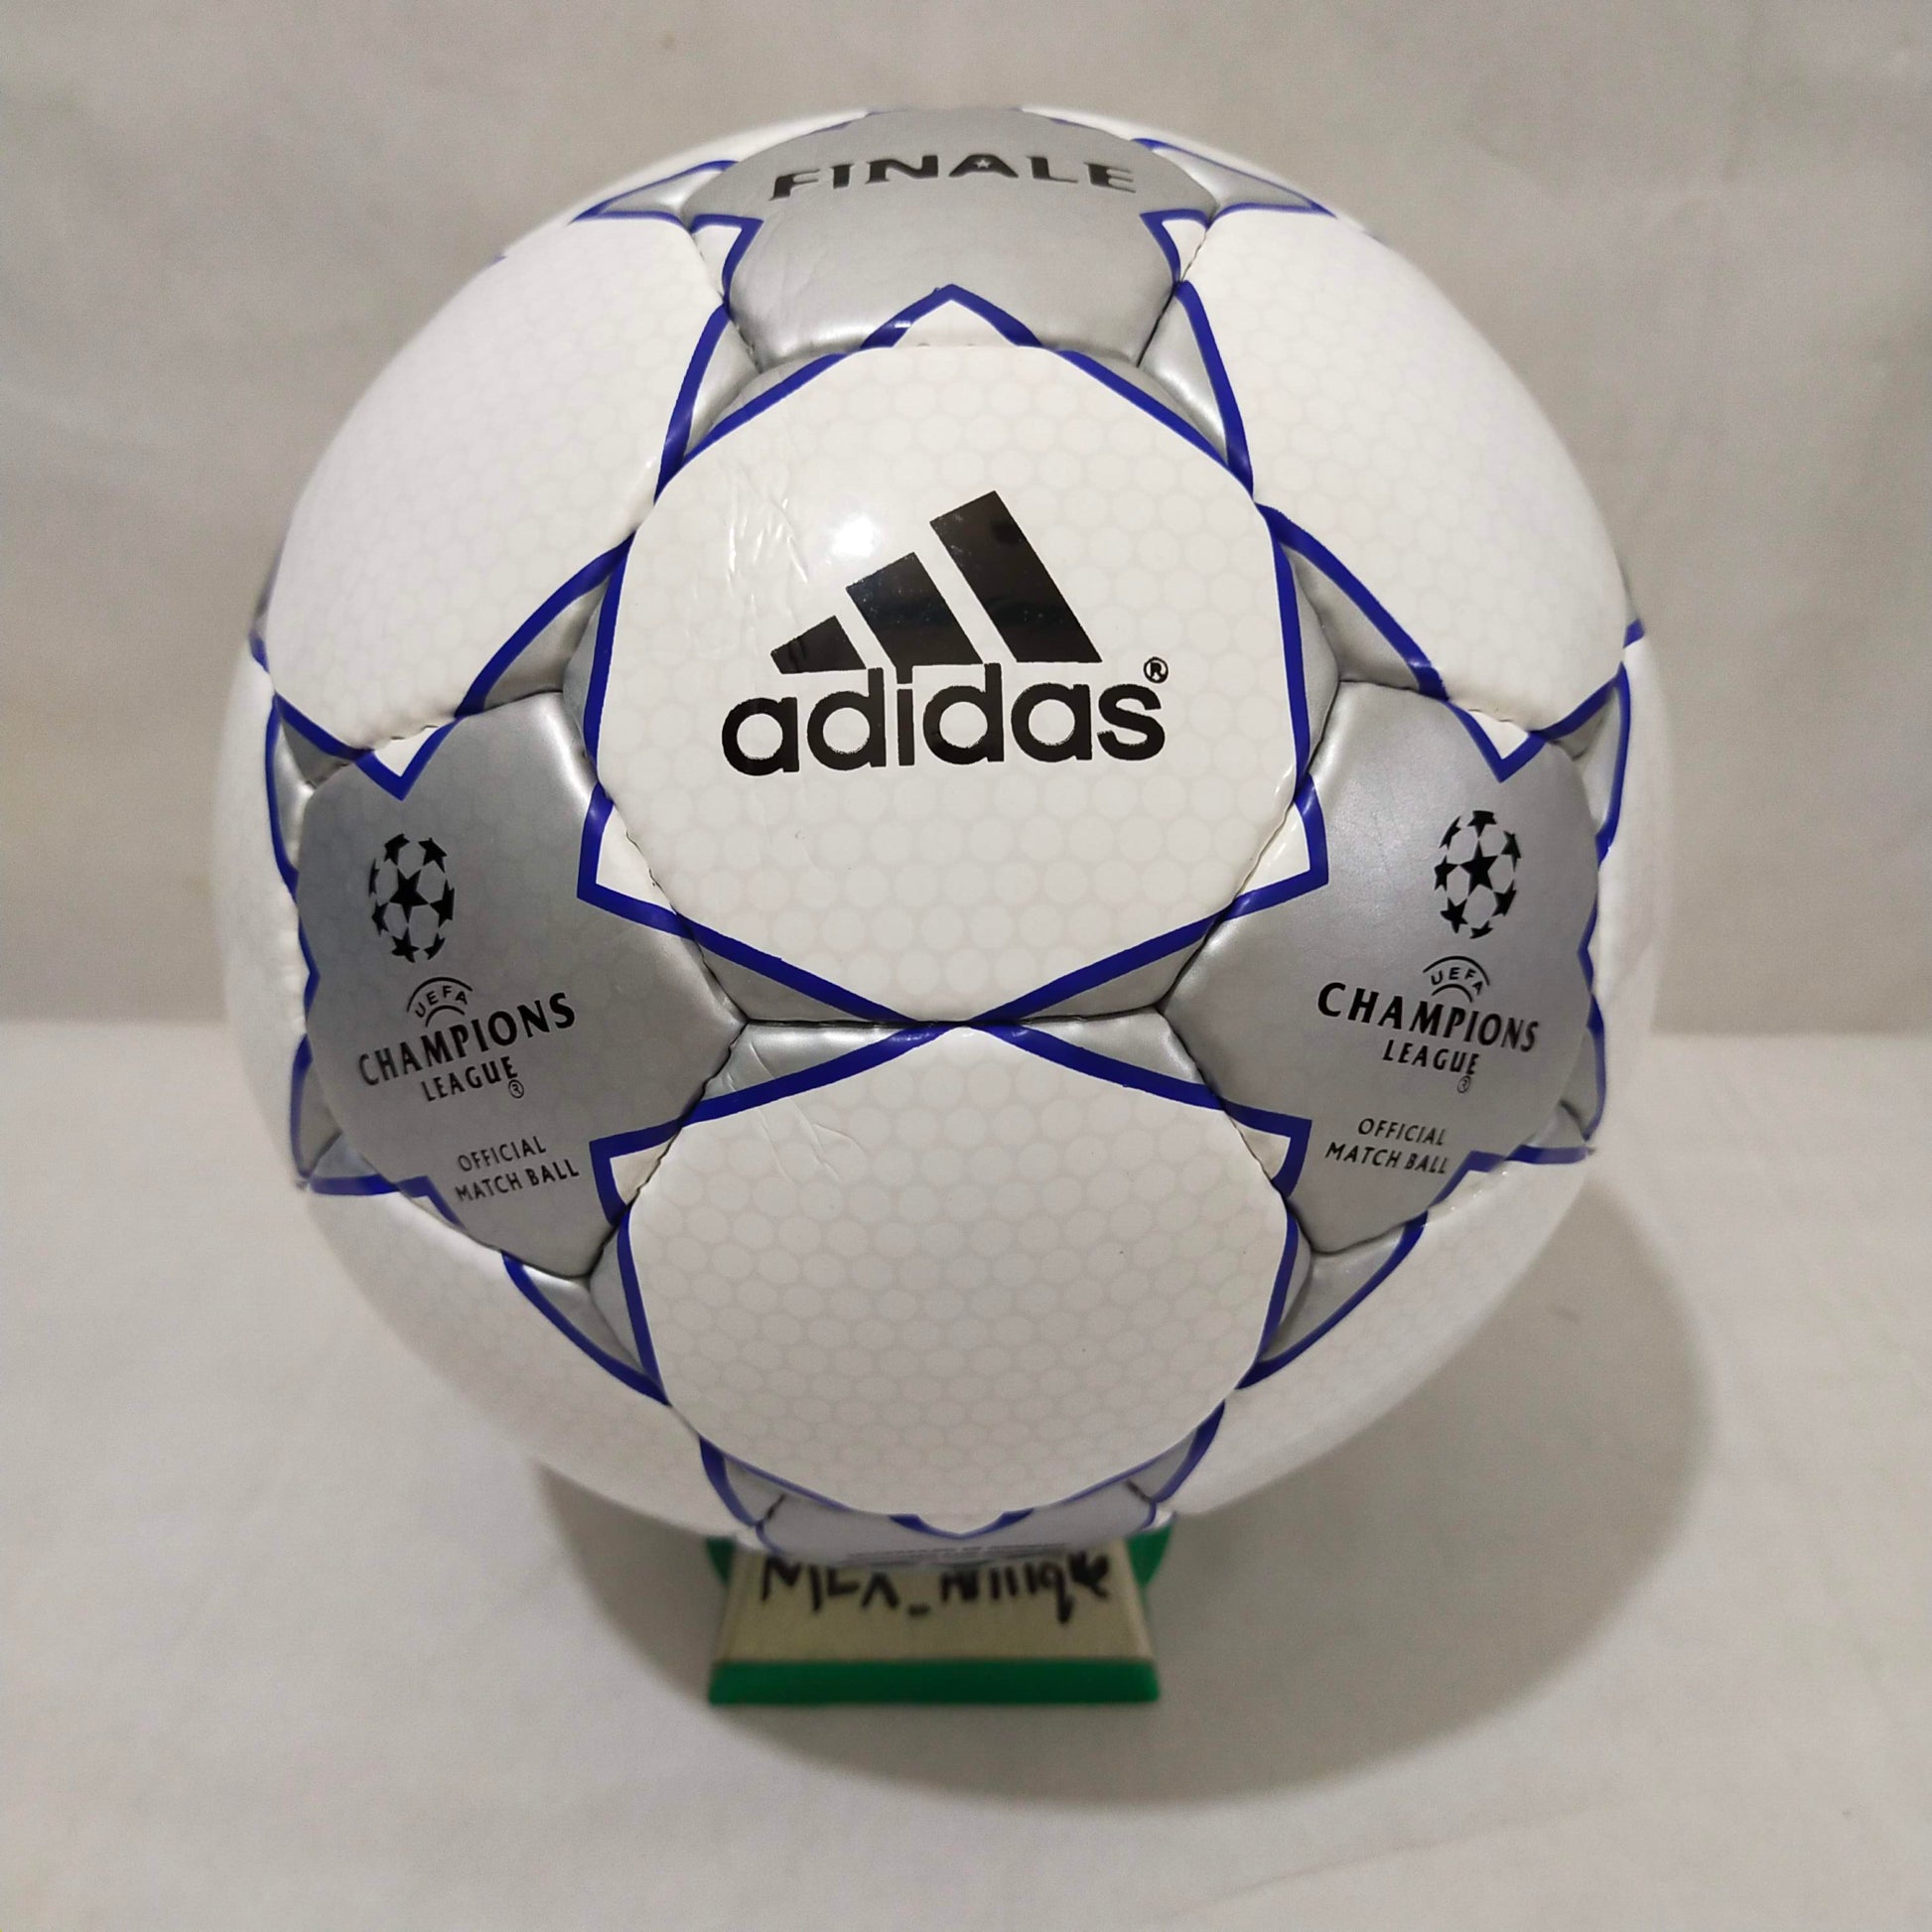 Adidas Finale 1 | 2001-2002 | UEFA Champions League Ball | Size 5 04